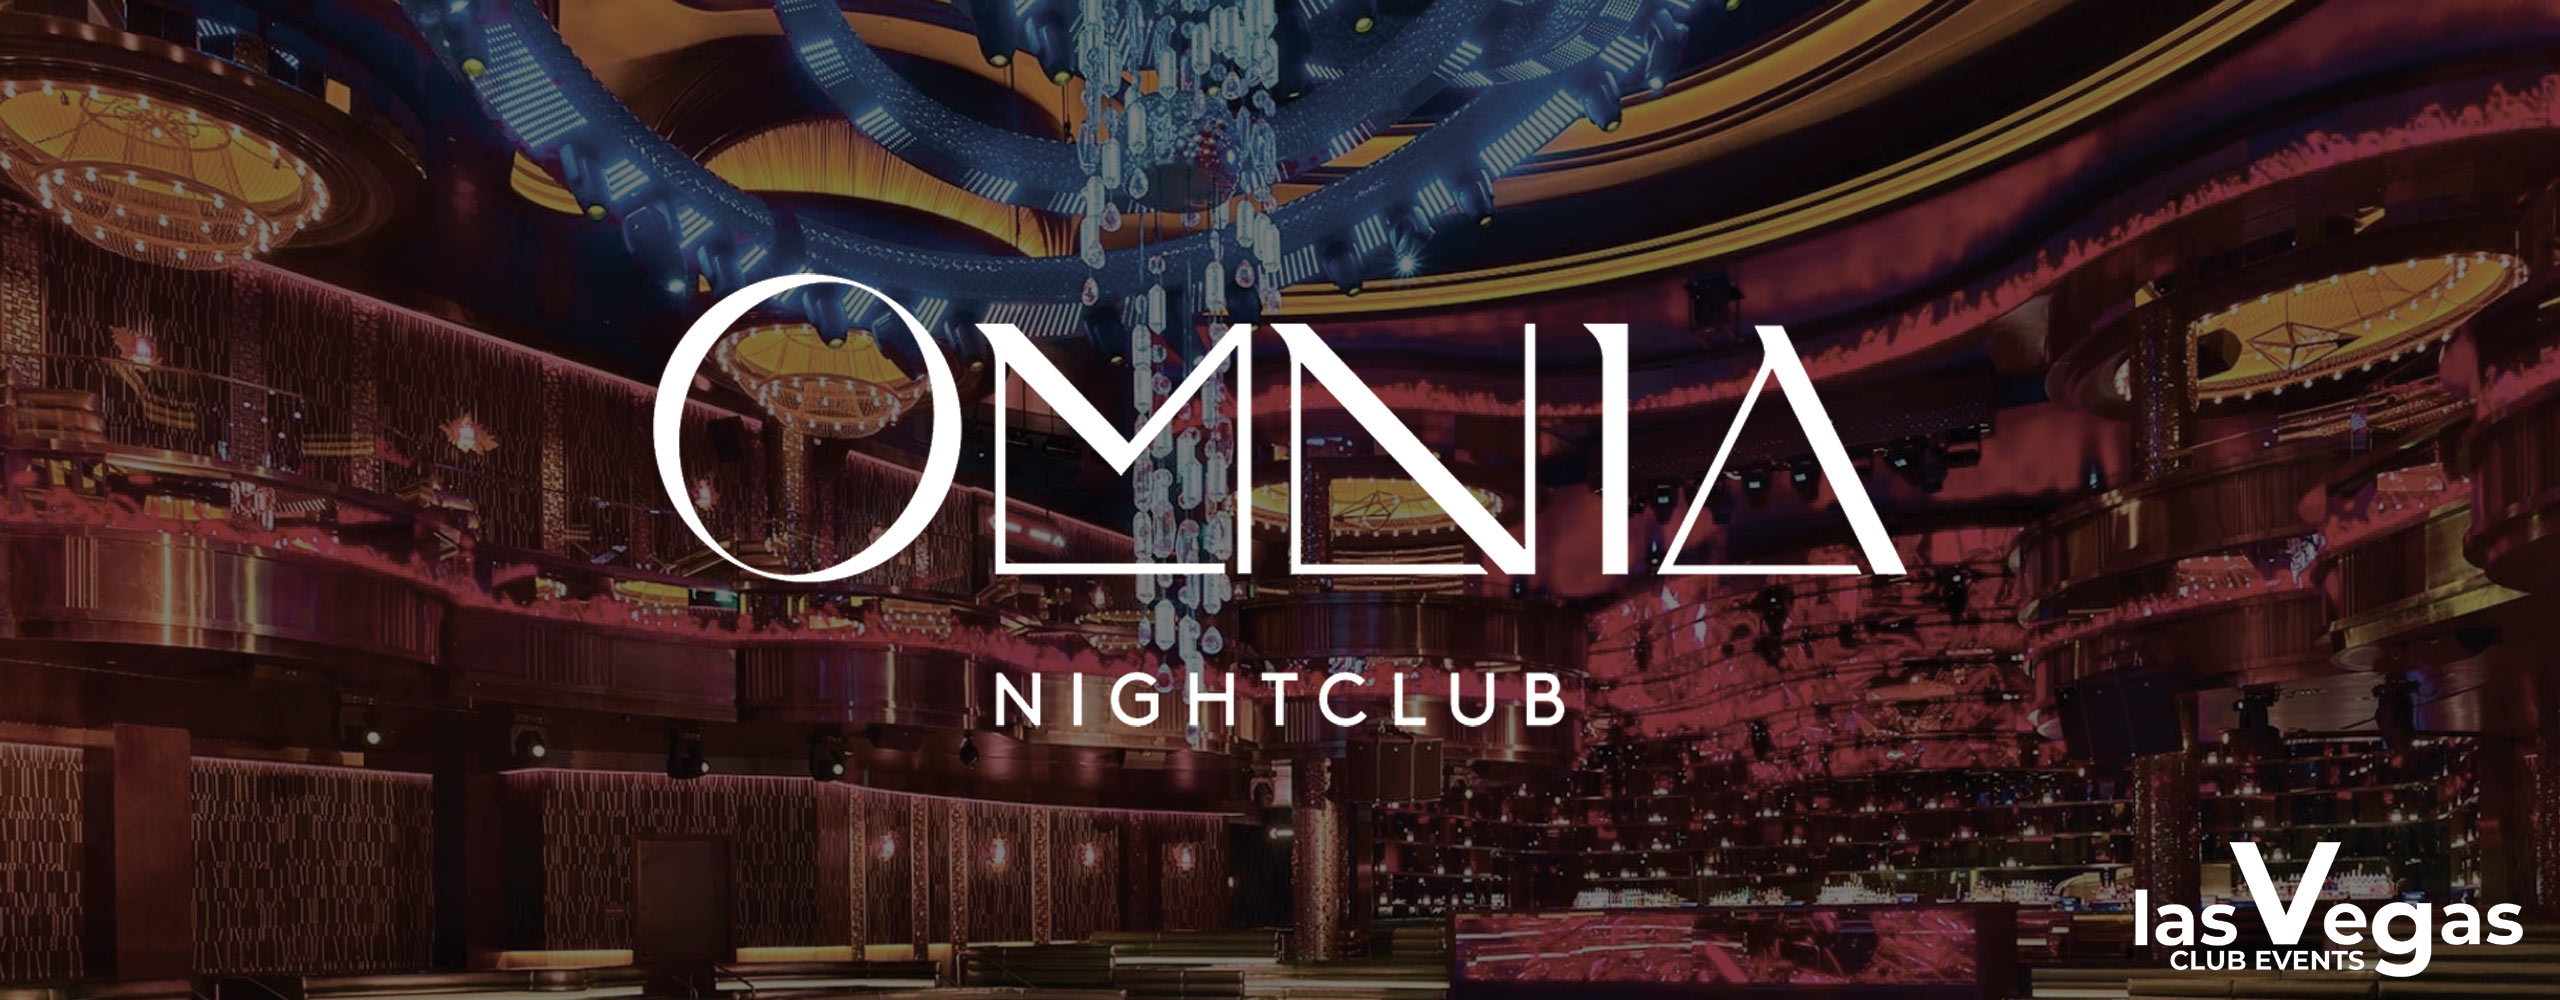 Omnia Las Vegas Club Events